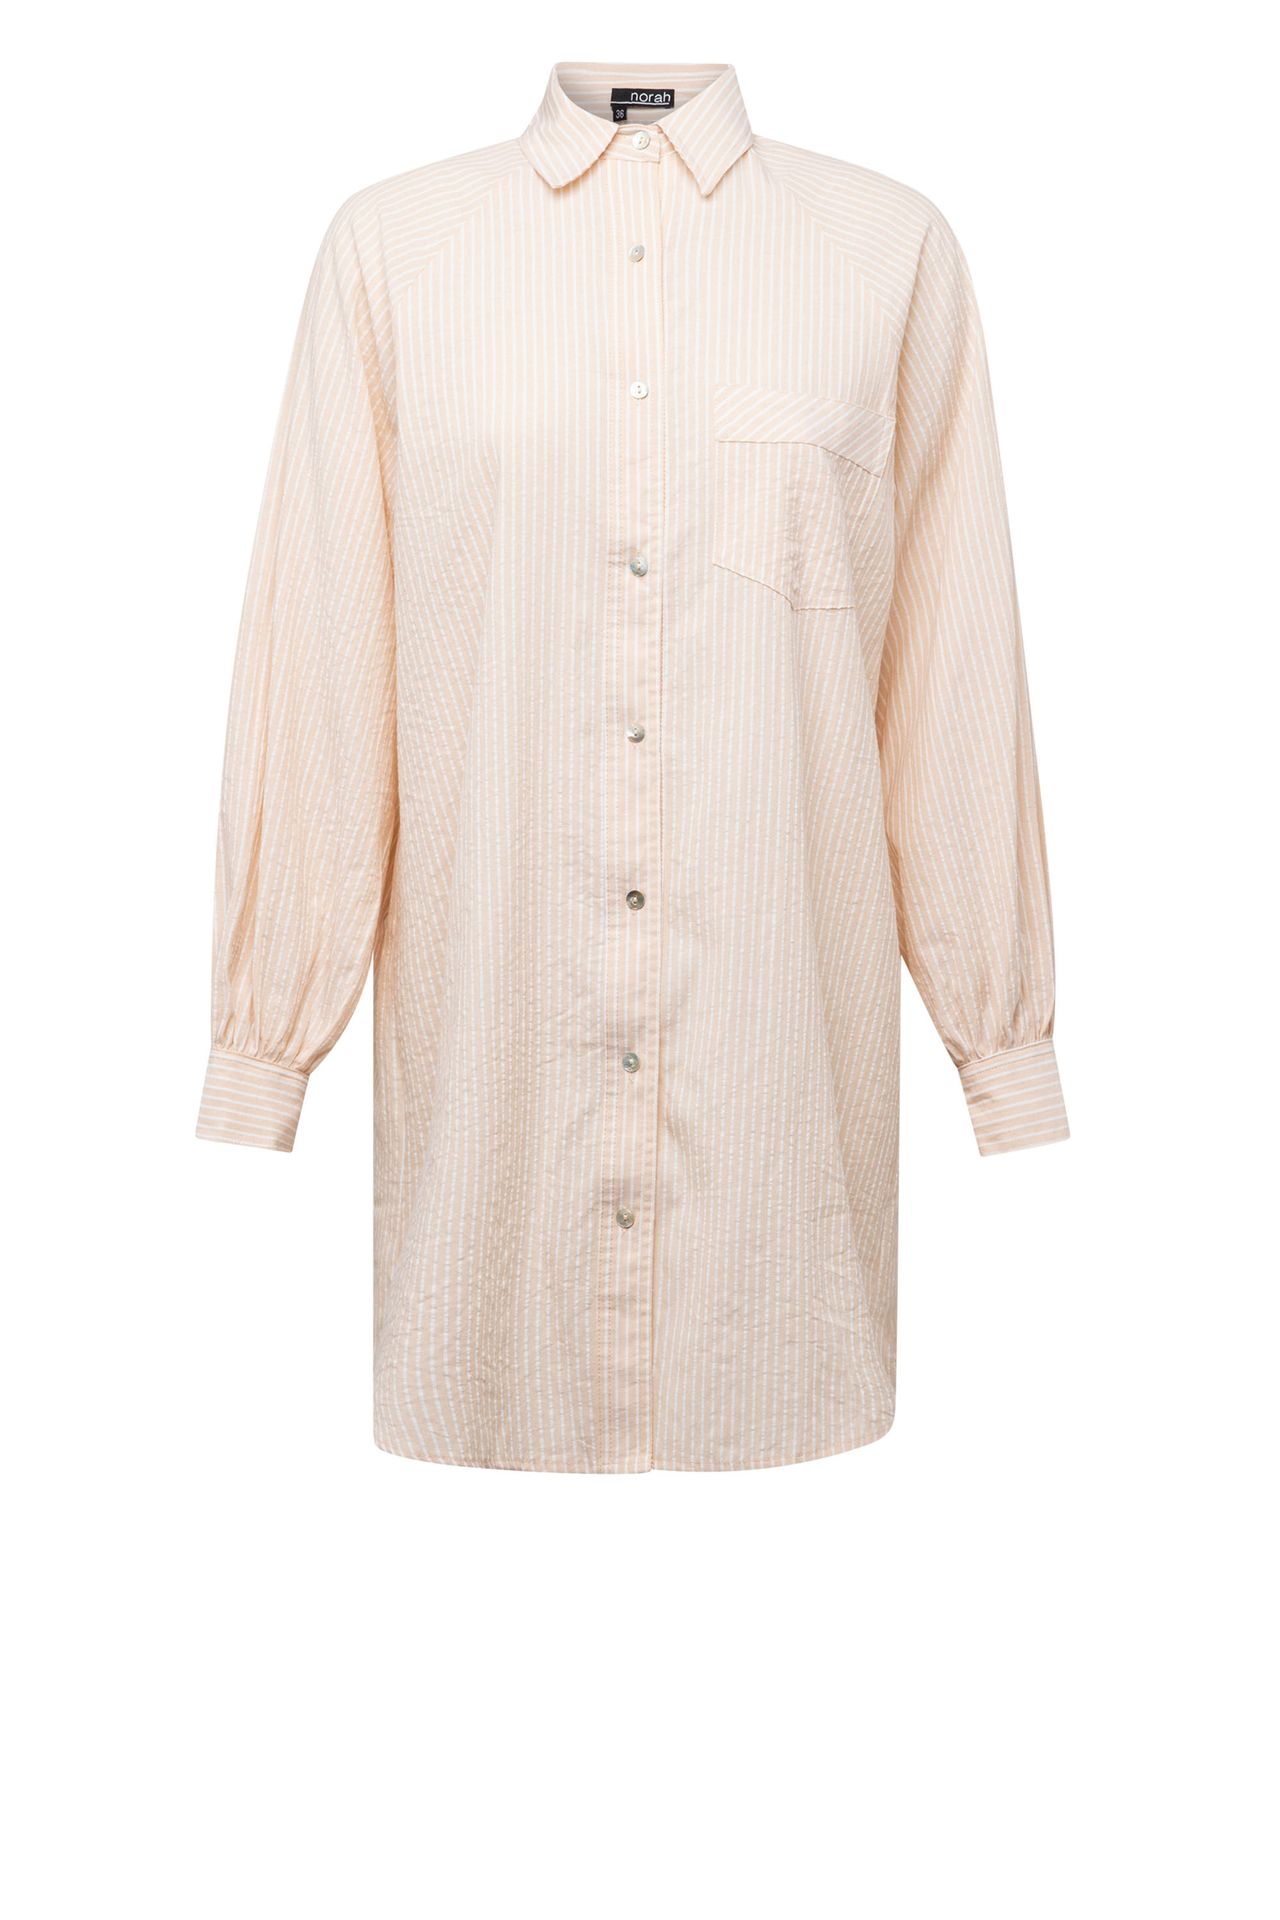 Norah Beige lange blouse met pofmouwen sand 213688-110